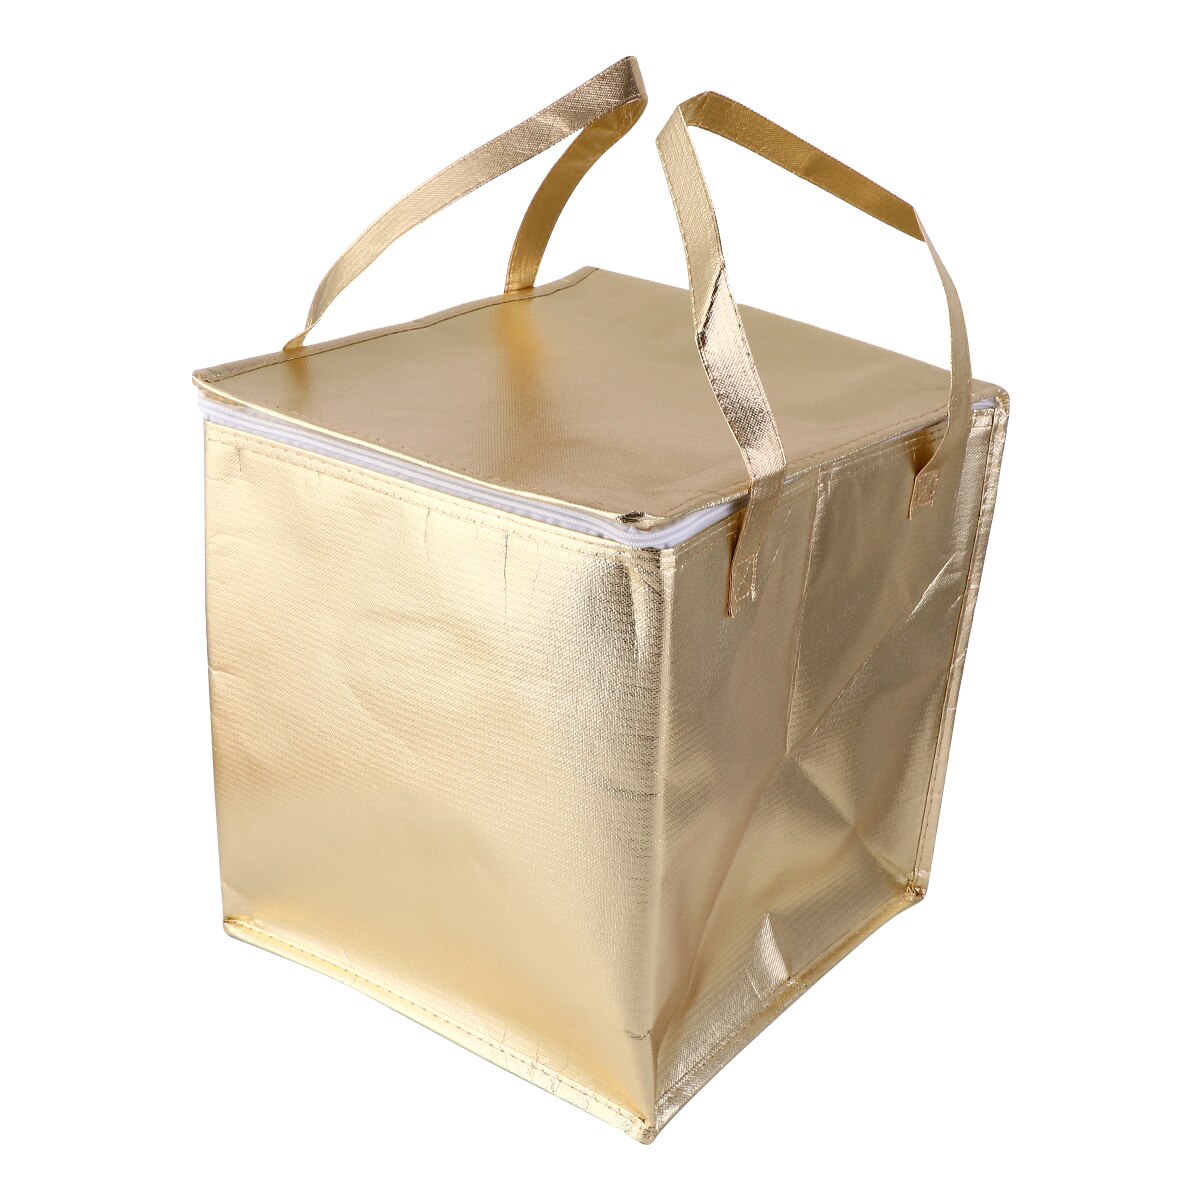 1Pc Outdoor Picknick Tas Herbruikbare Draagtas Koeltas Tote Bag Handheld Koeltas Voor Cake Ijs